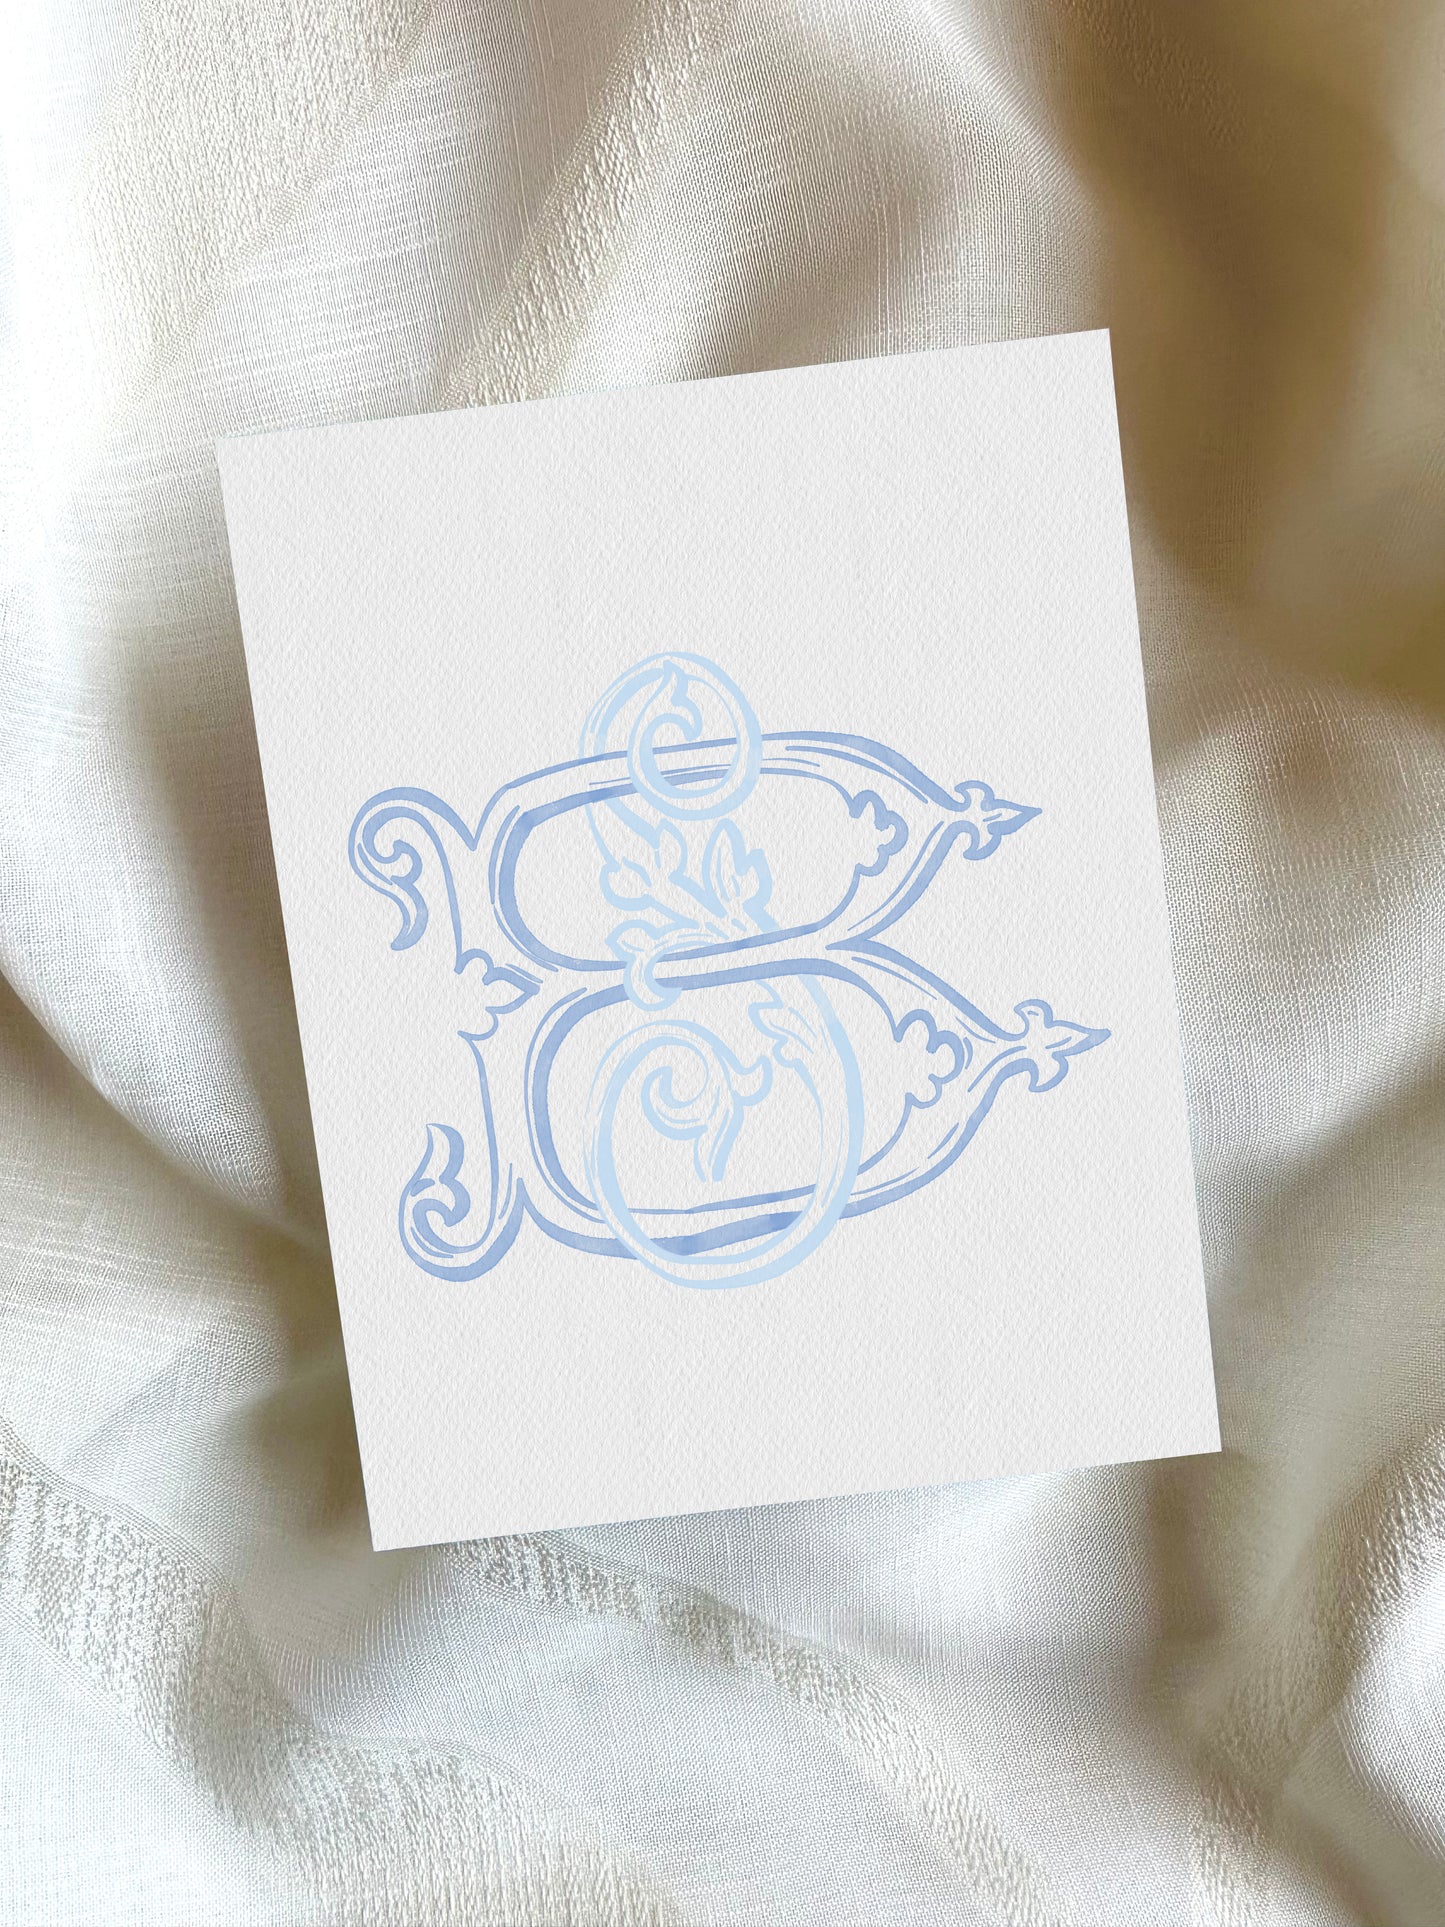 2 Letter Monogram with Letters BS SB | Digital Download - Wedding Monogram SVG, Personal Logo, Wedding Logo for Wedding Invitations